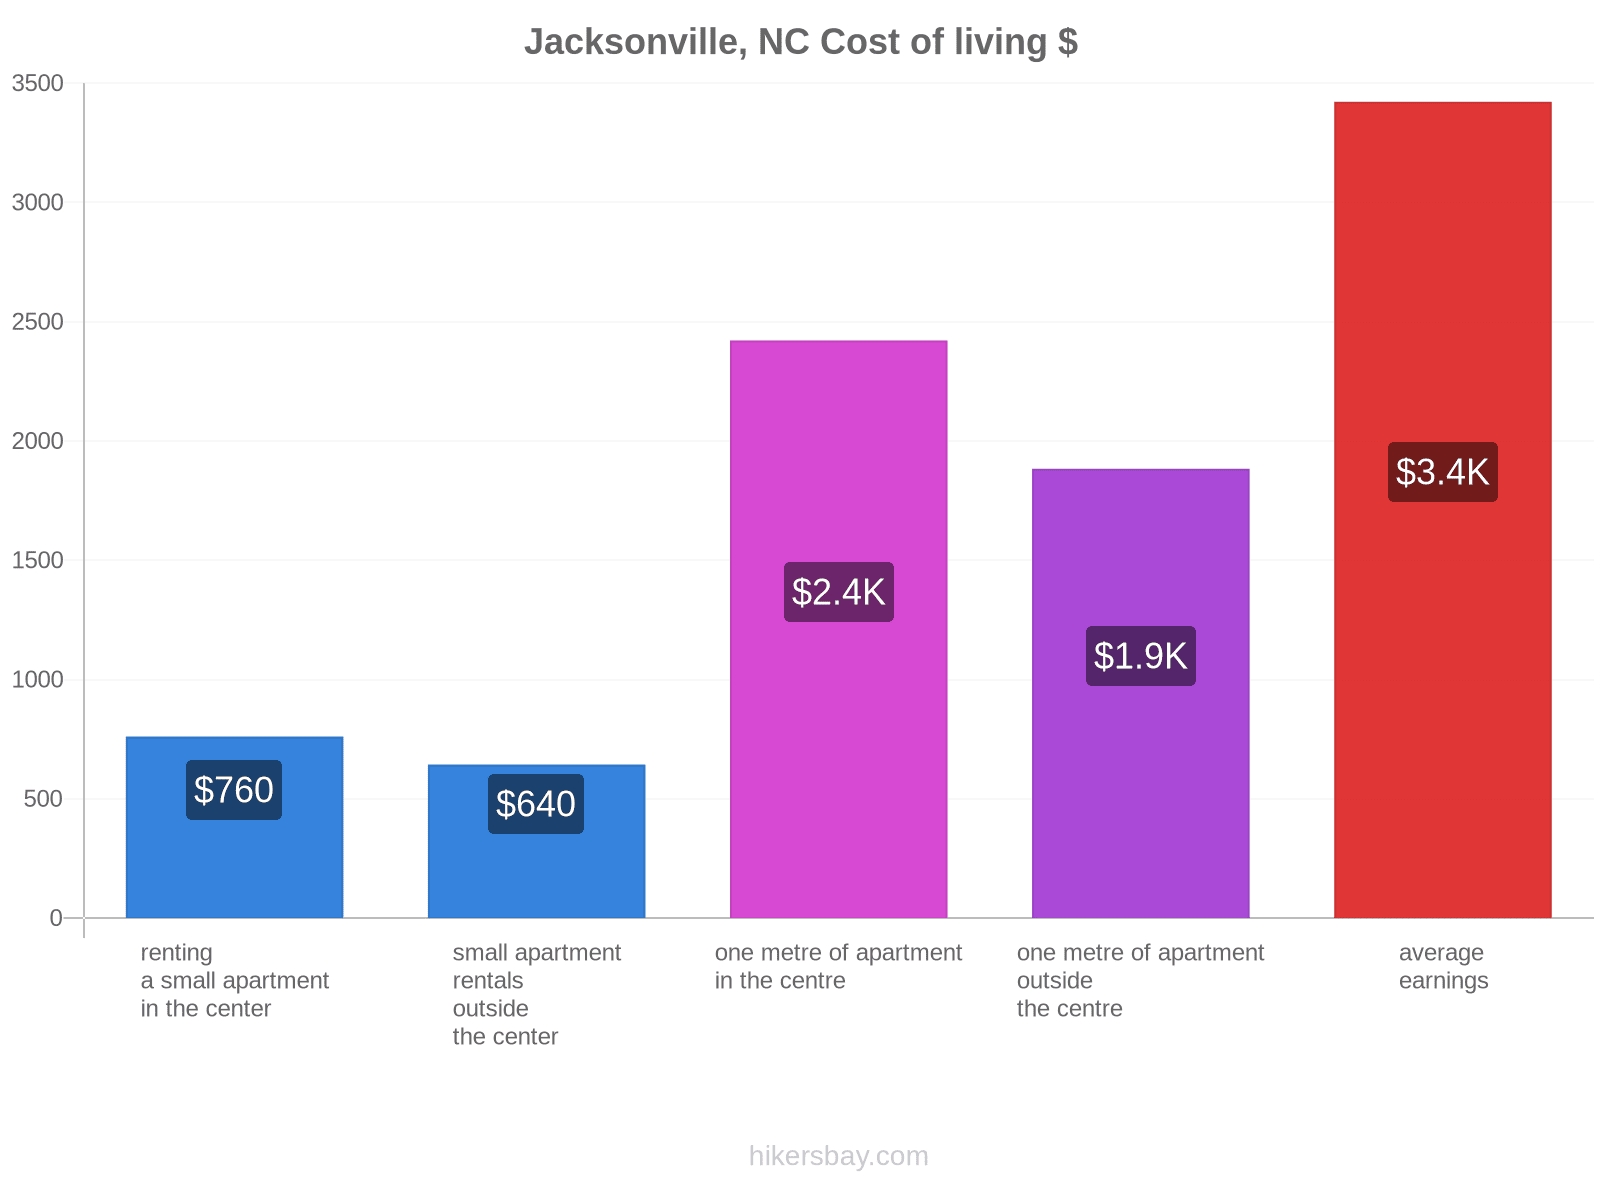 Jacksonville, NC cost of living hikersbay.com